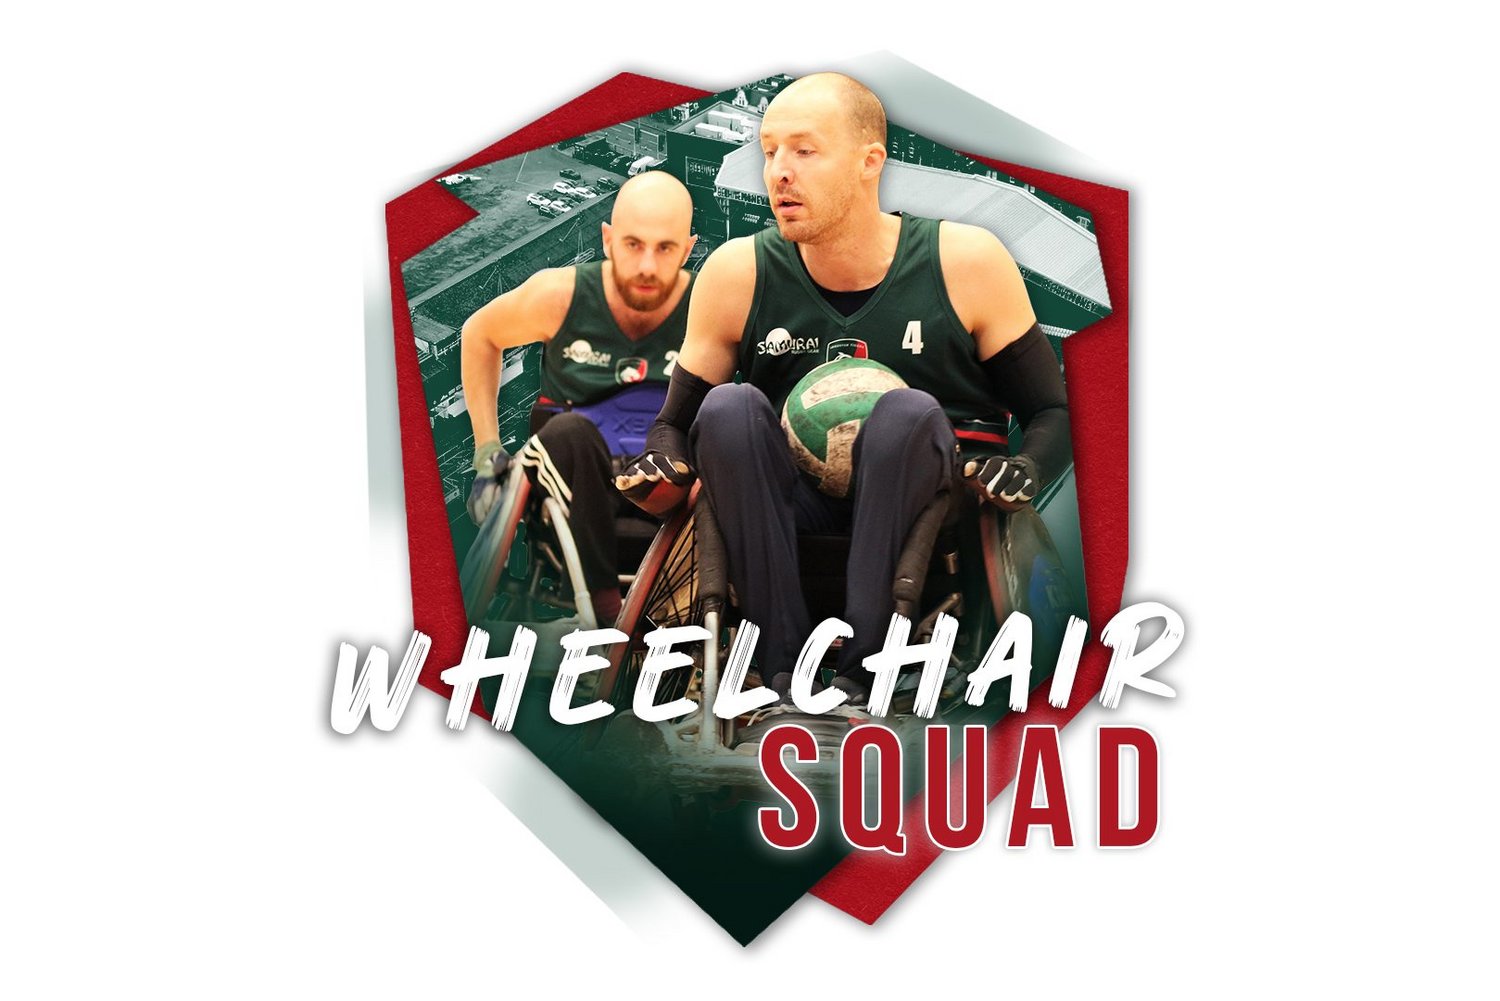 Wheelchair Squad